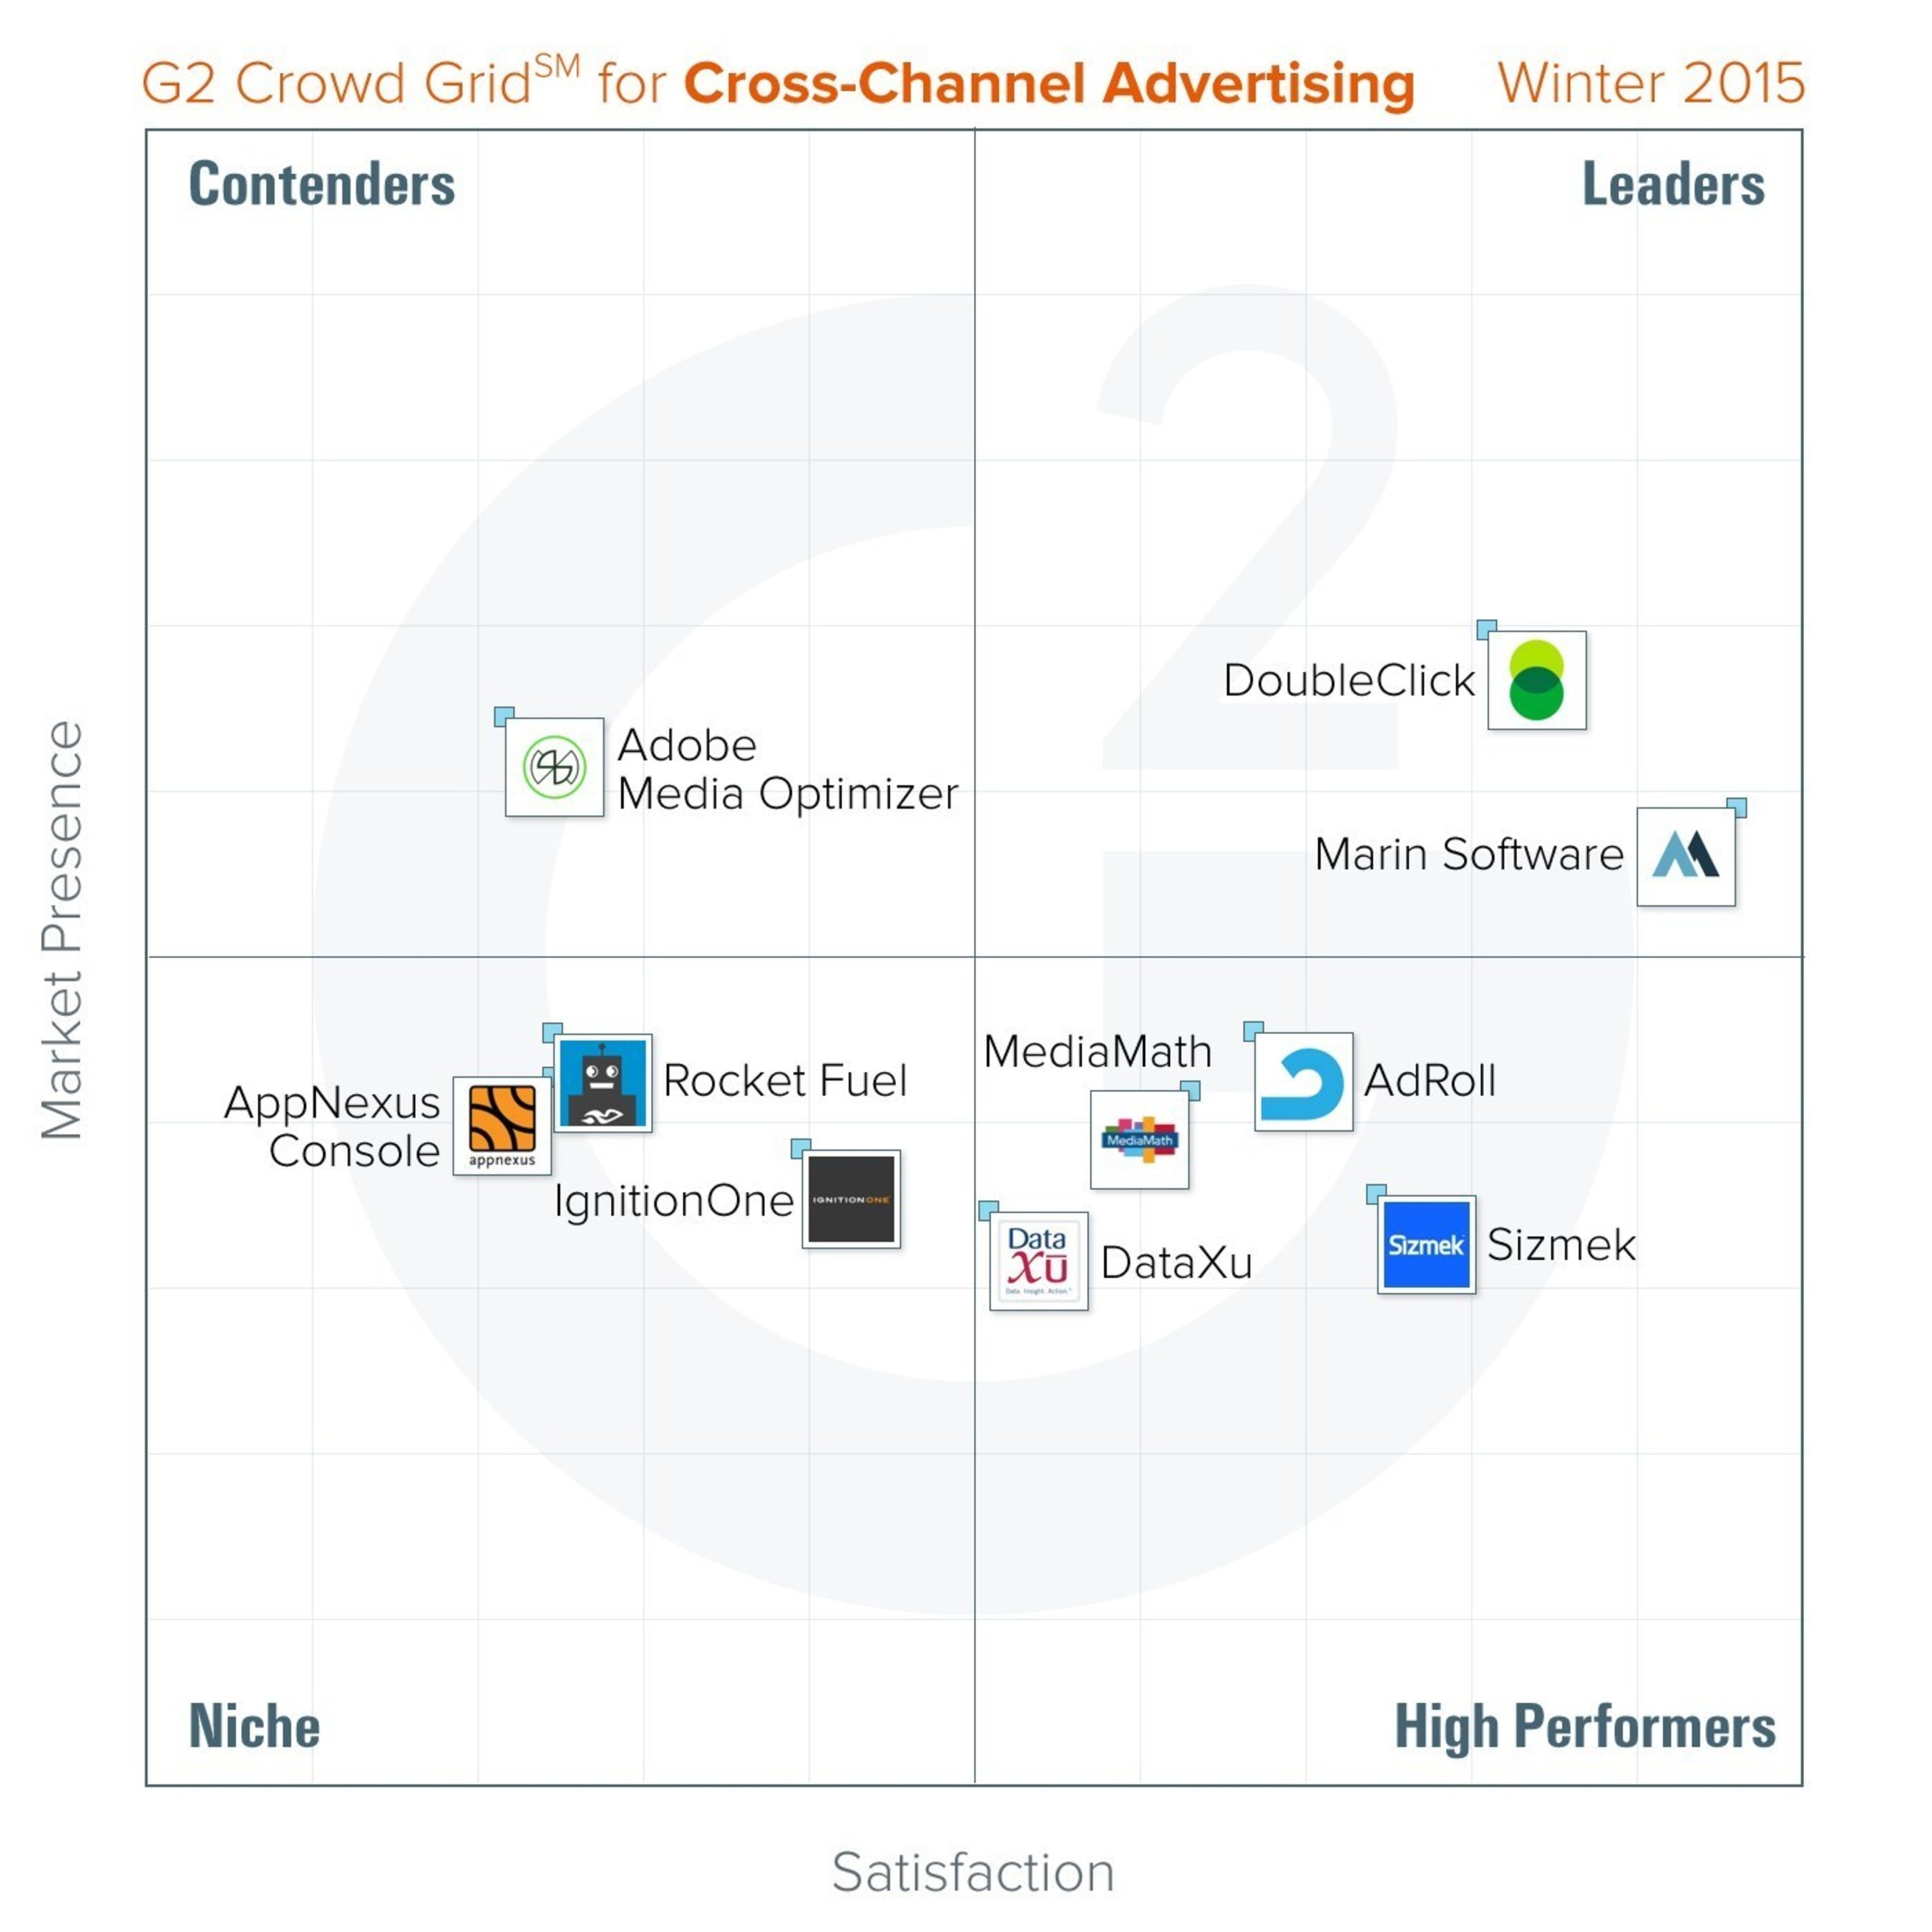 Best Cross-Channel Advertising Platforms - Winter 2015 - G2 Crowd Grid